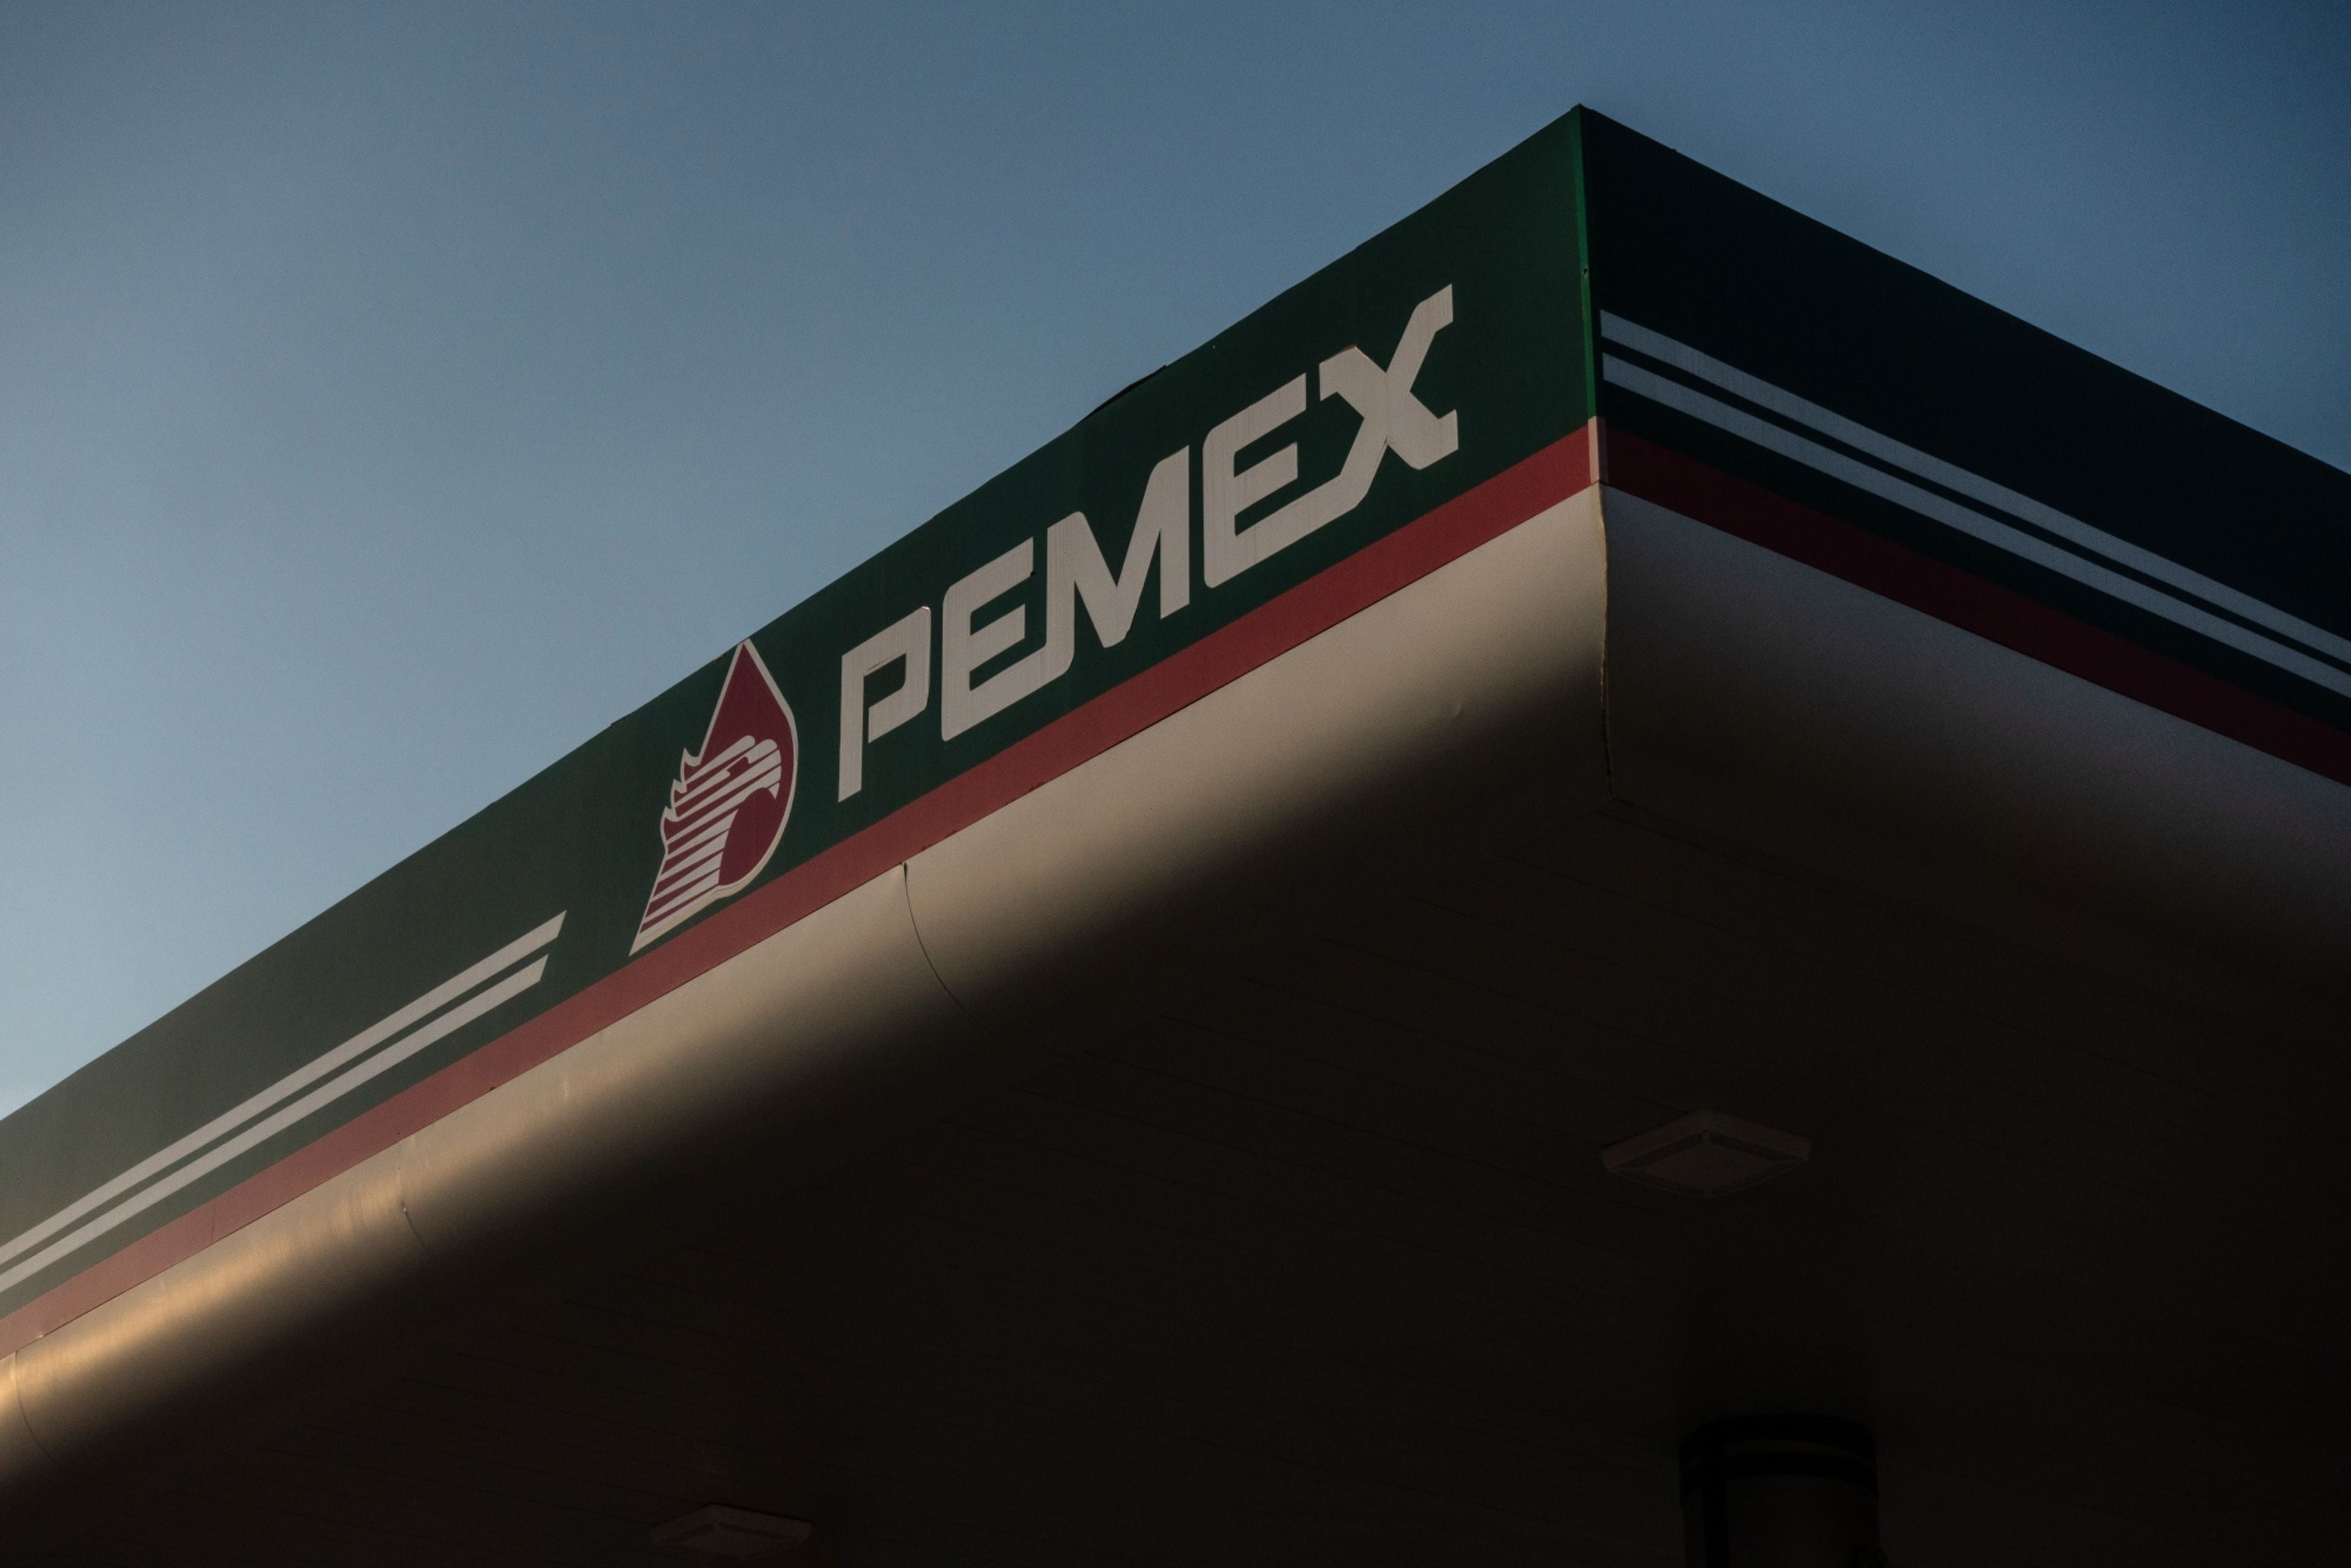 Usurpan a Pemex: Alerta sobre premio falso de 9 mil pesos